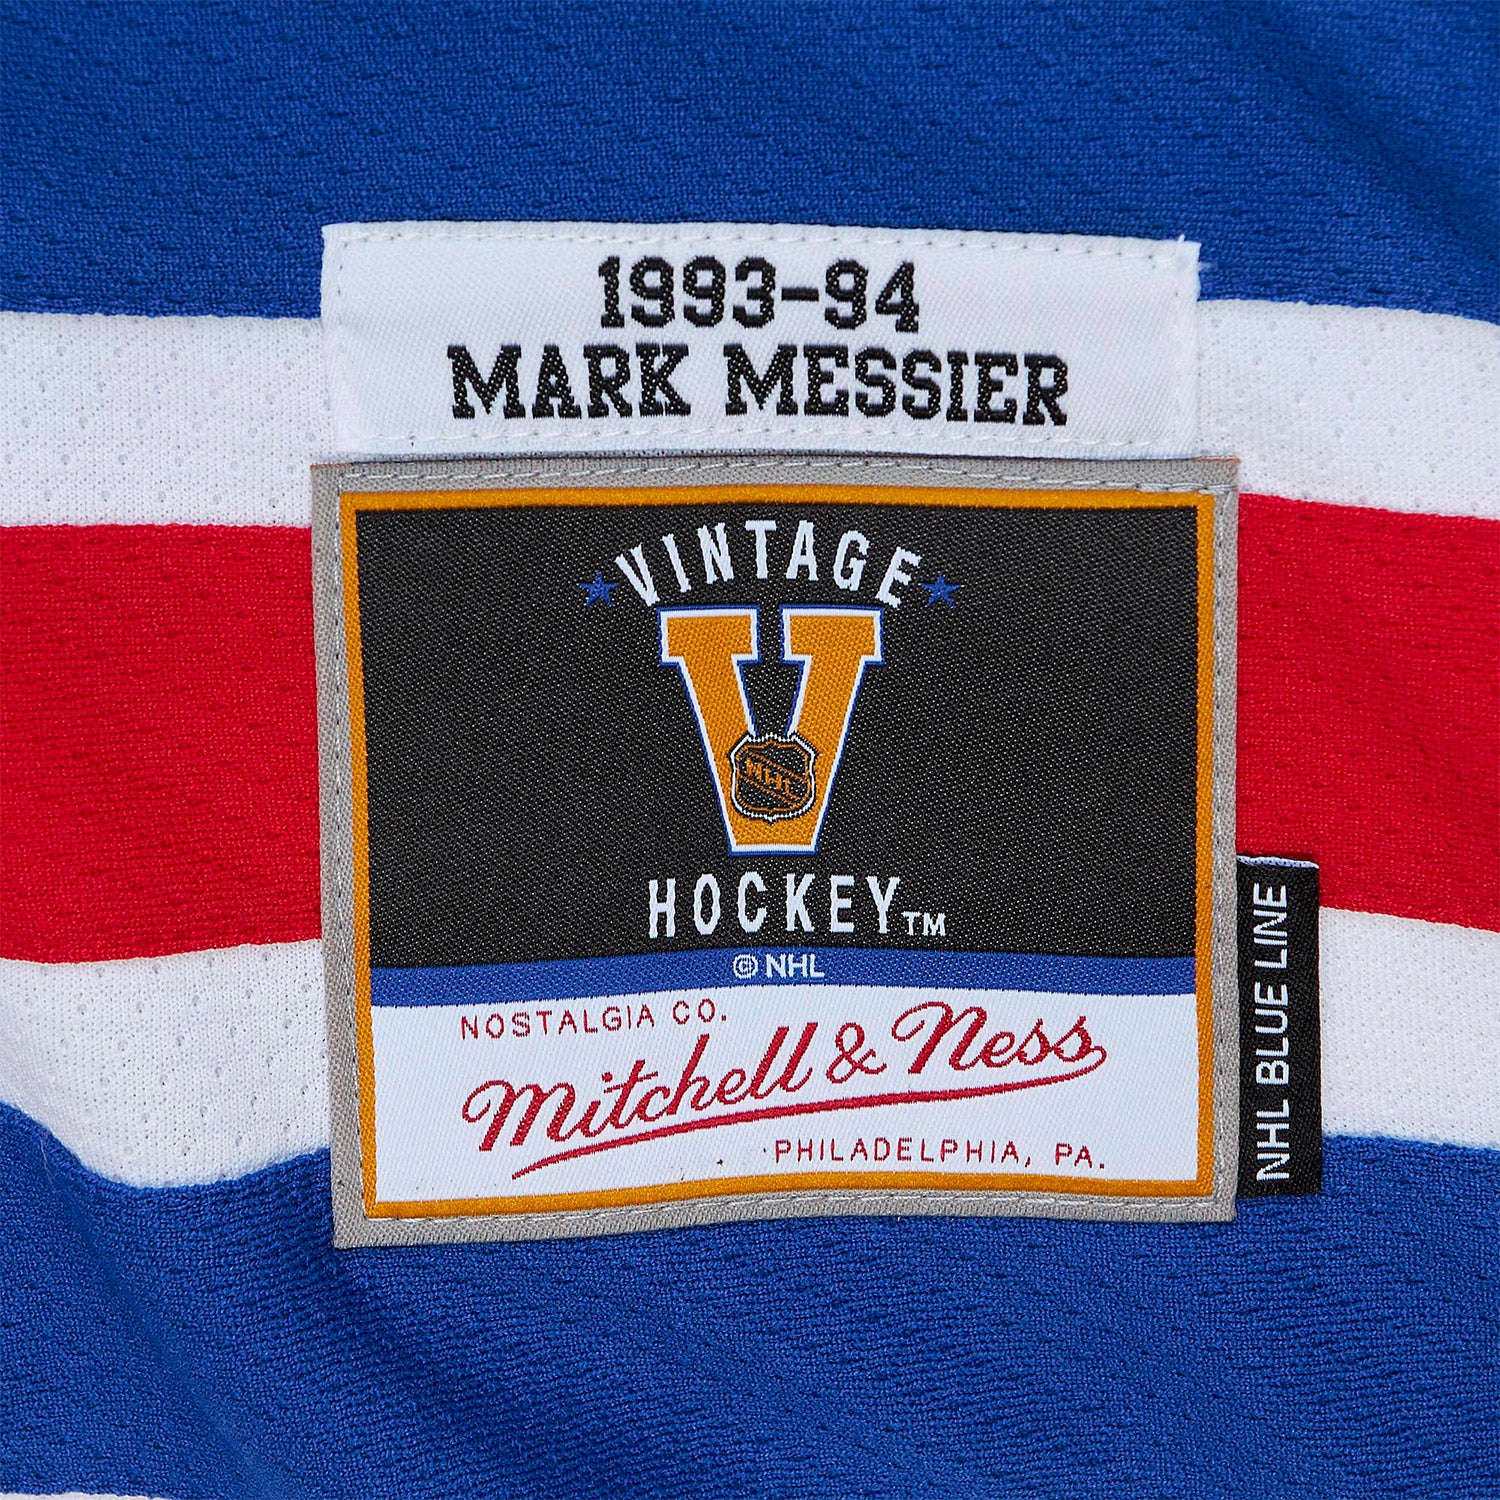 NHL Apparel, Jerseys, and Headwear Mitchell & Ness Nostalgia Co.